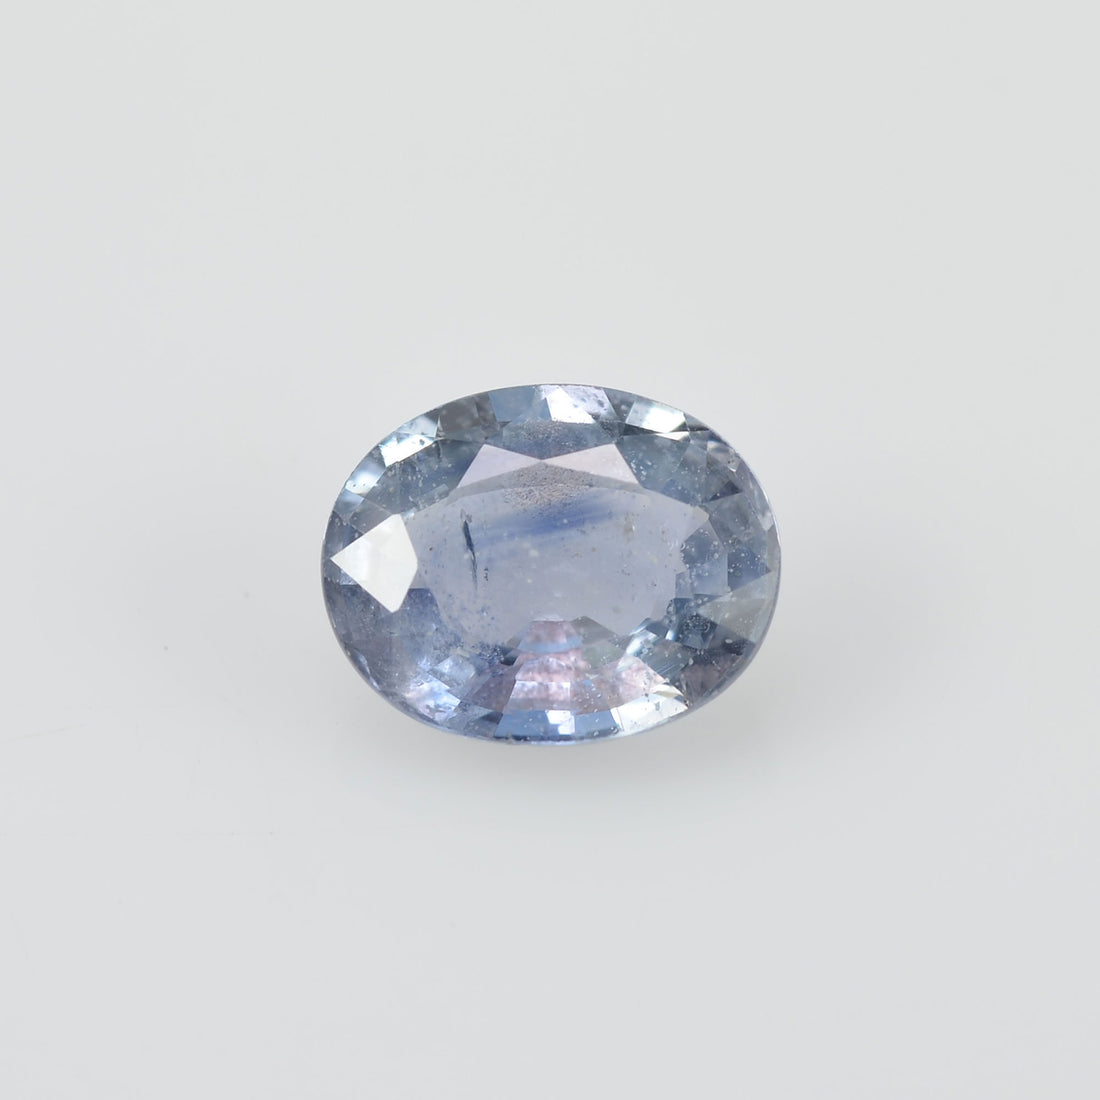 1.50 cts Natural Blue Teal Sapphire Loose Gemstone Oval Cut - Thai Gems Export Ltd.